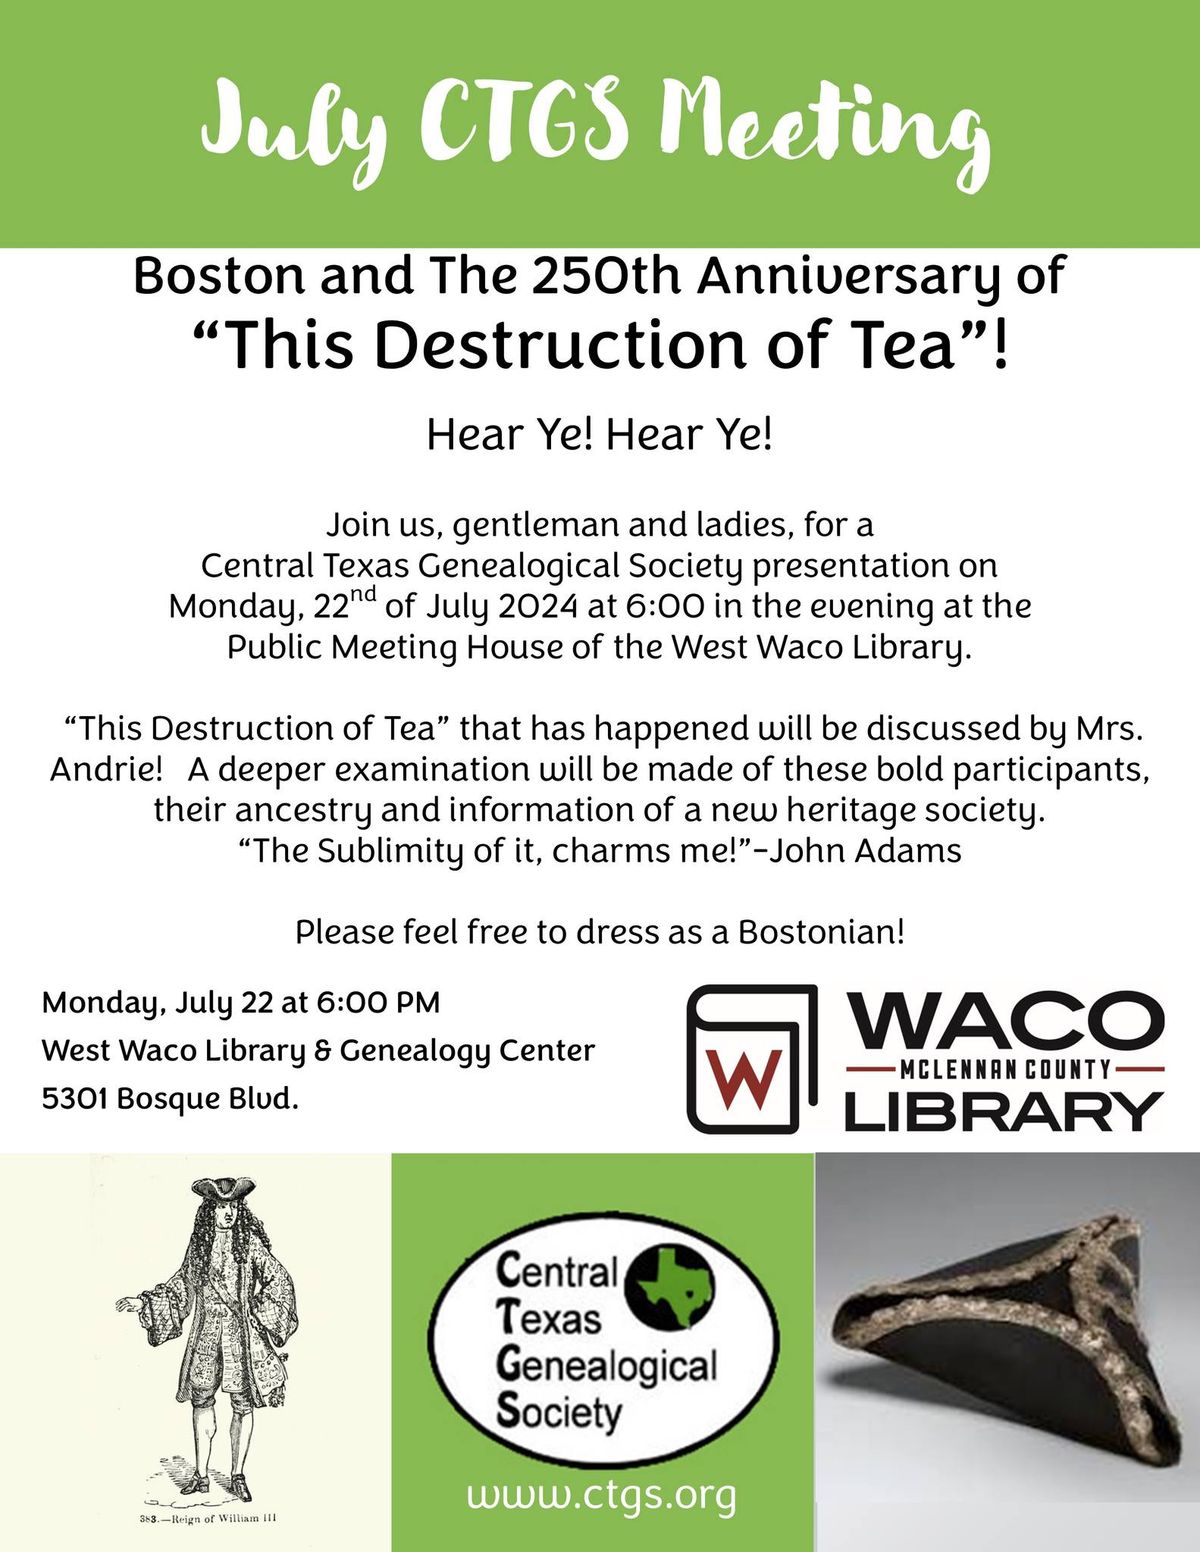 CTGS Presents: "This Destruction of Tea!"